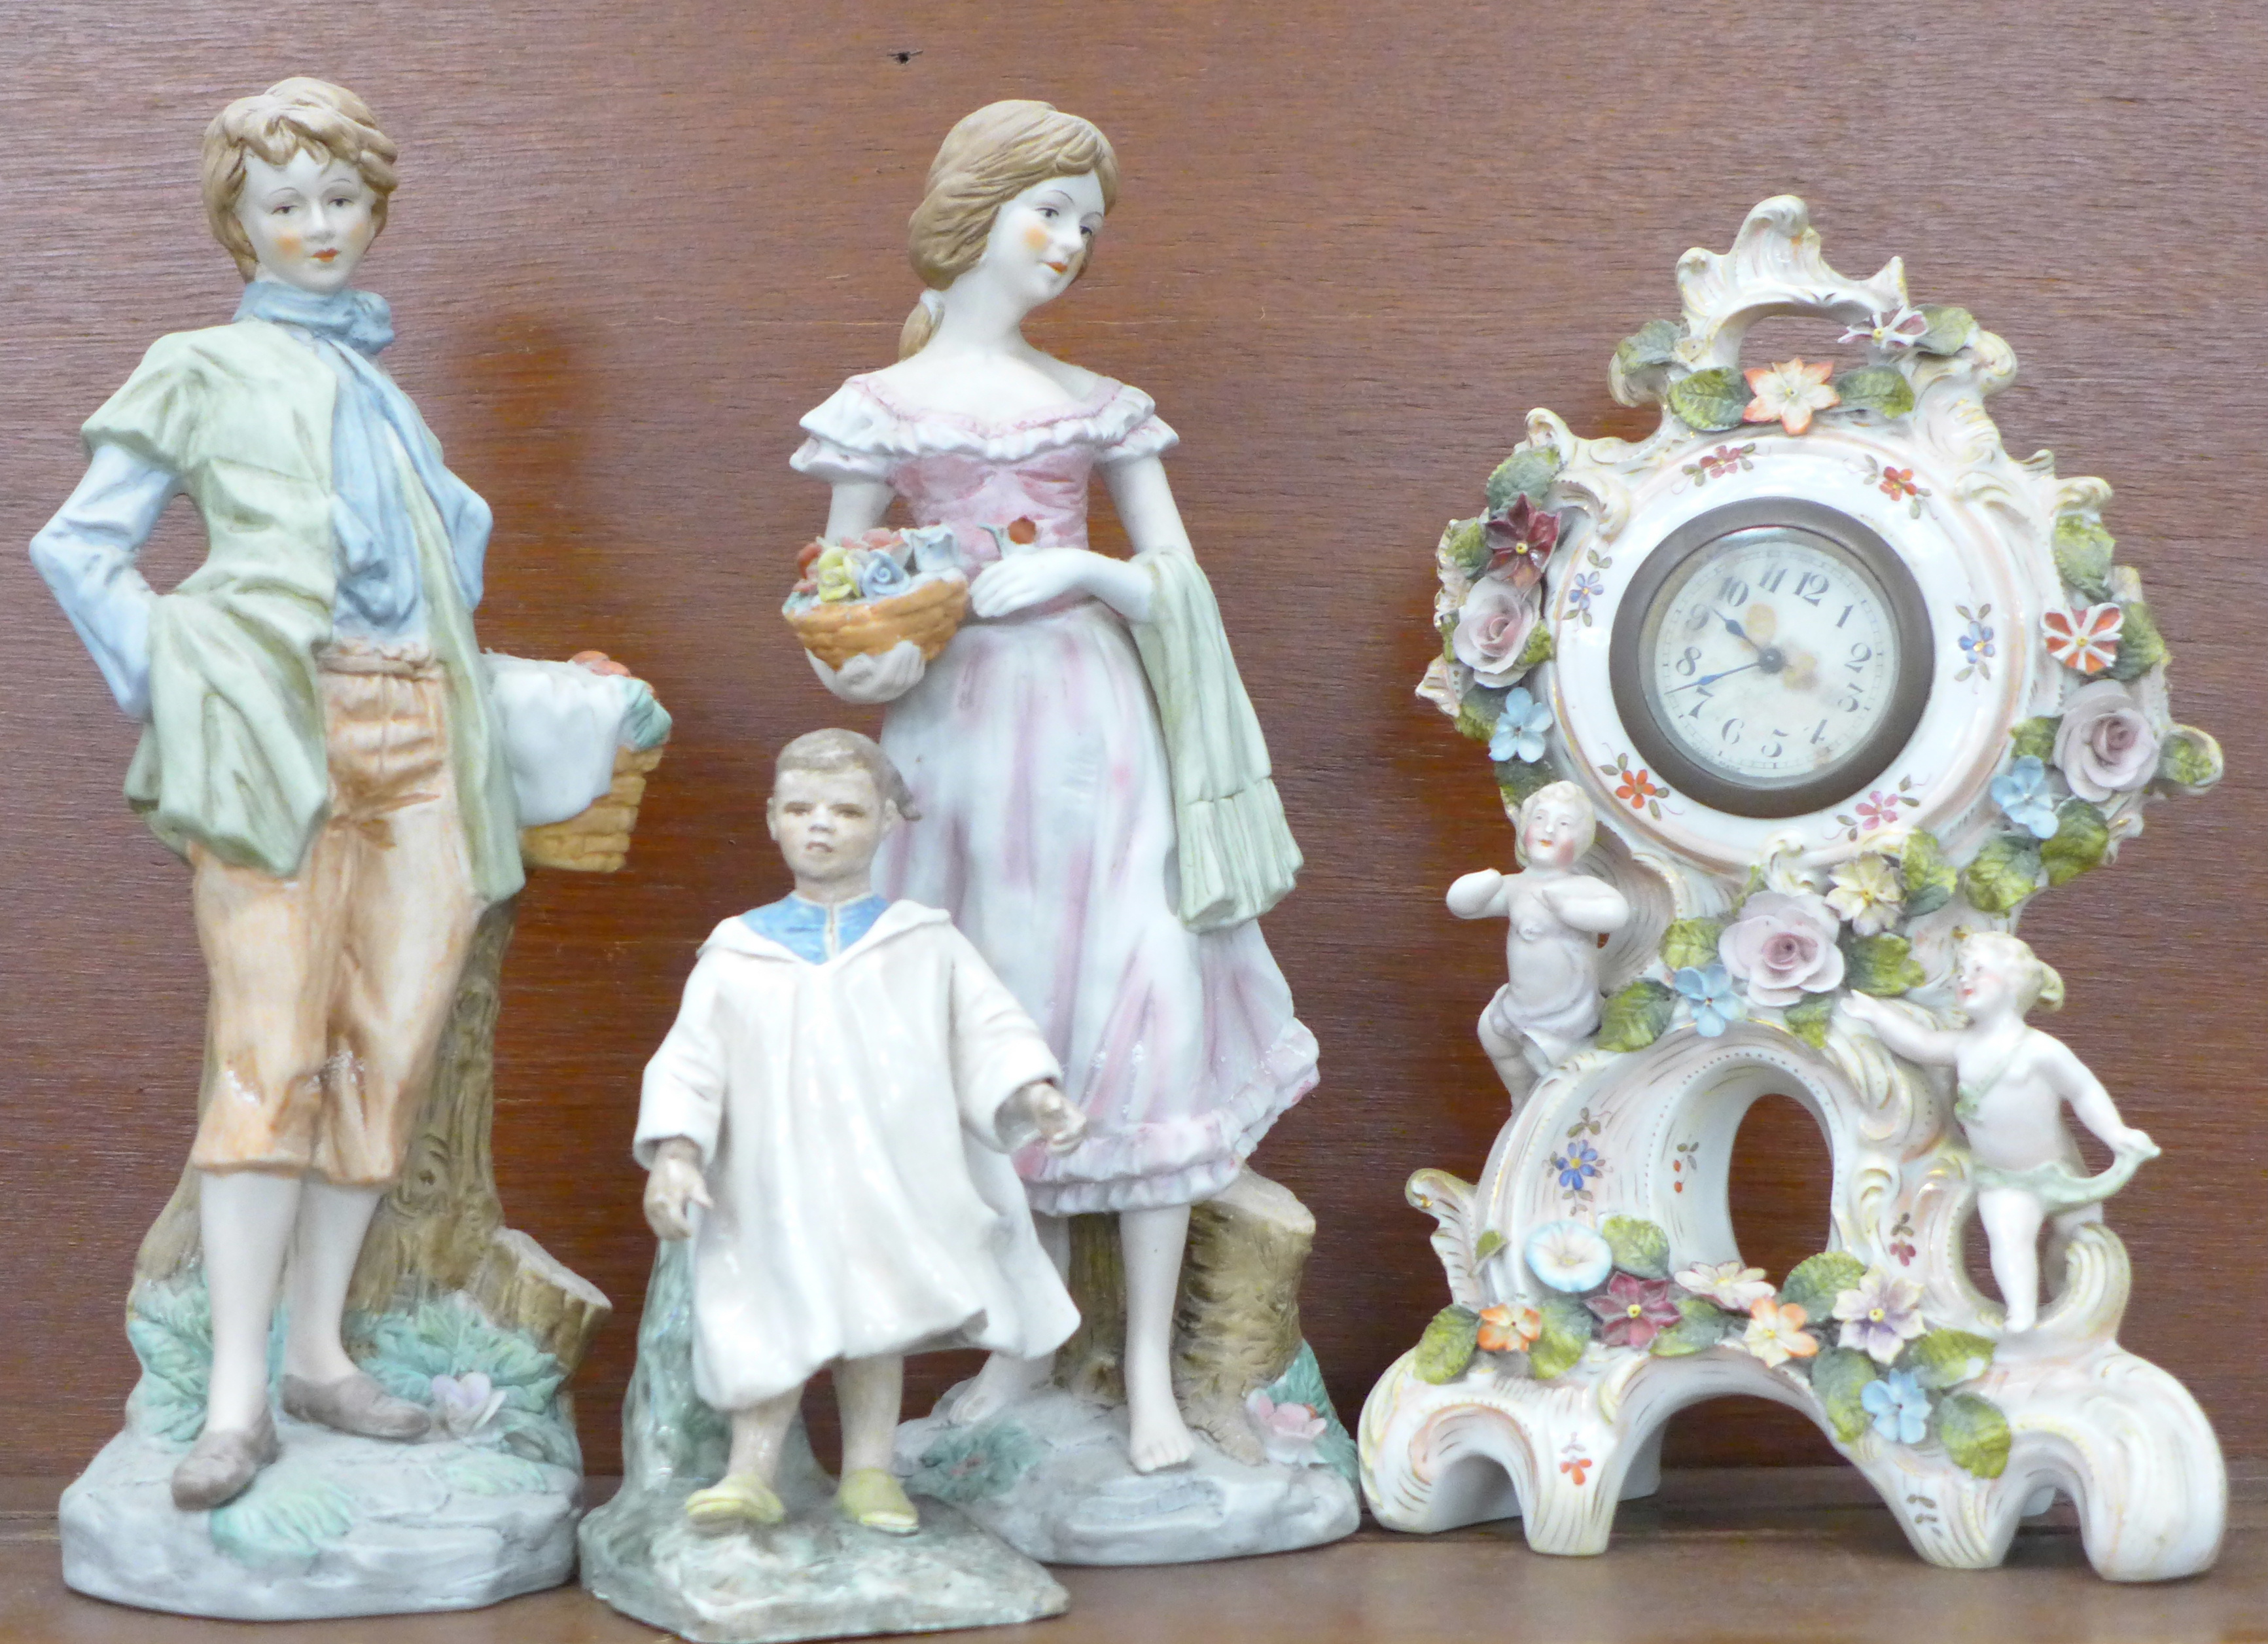 A cherub porcelain mantel clock, a hand painted porcelain ceramic Johnny Appleseed figure, hand